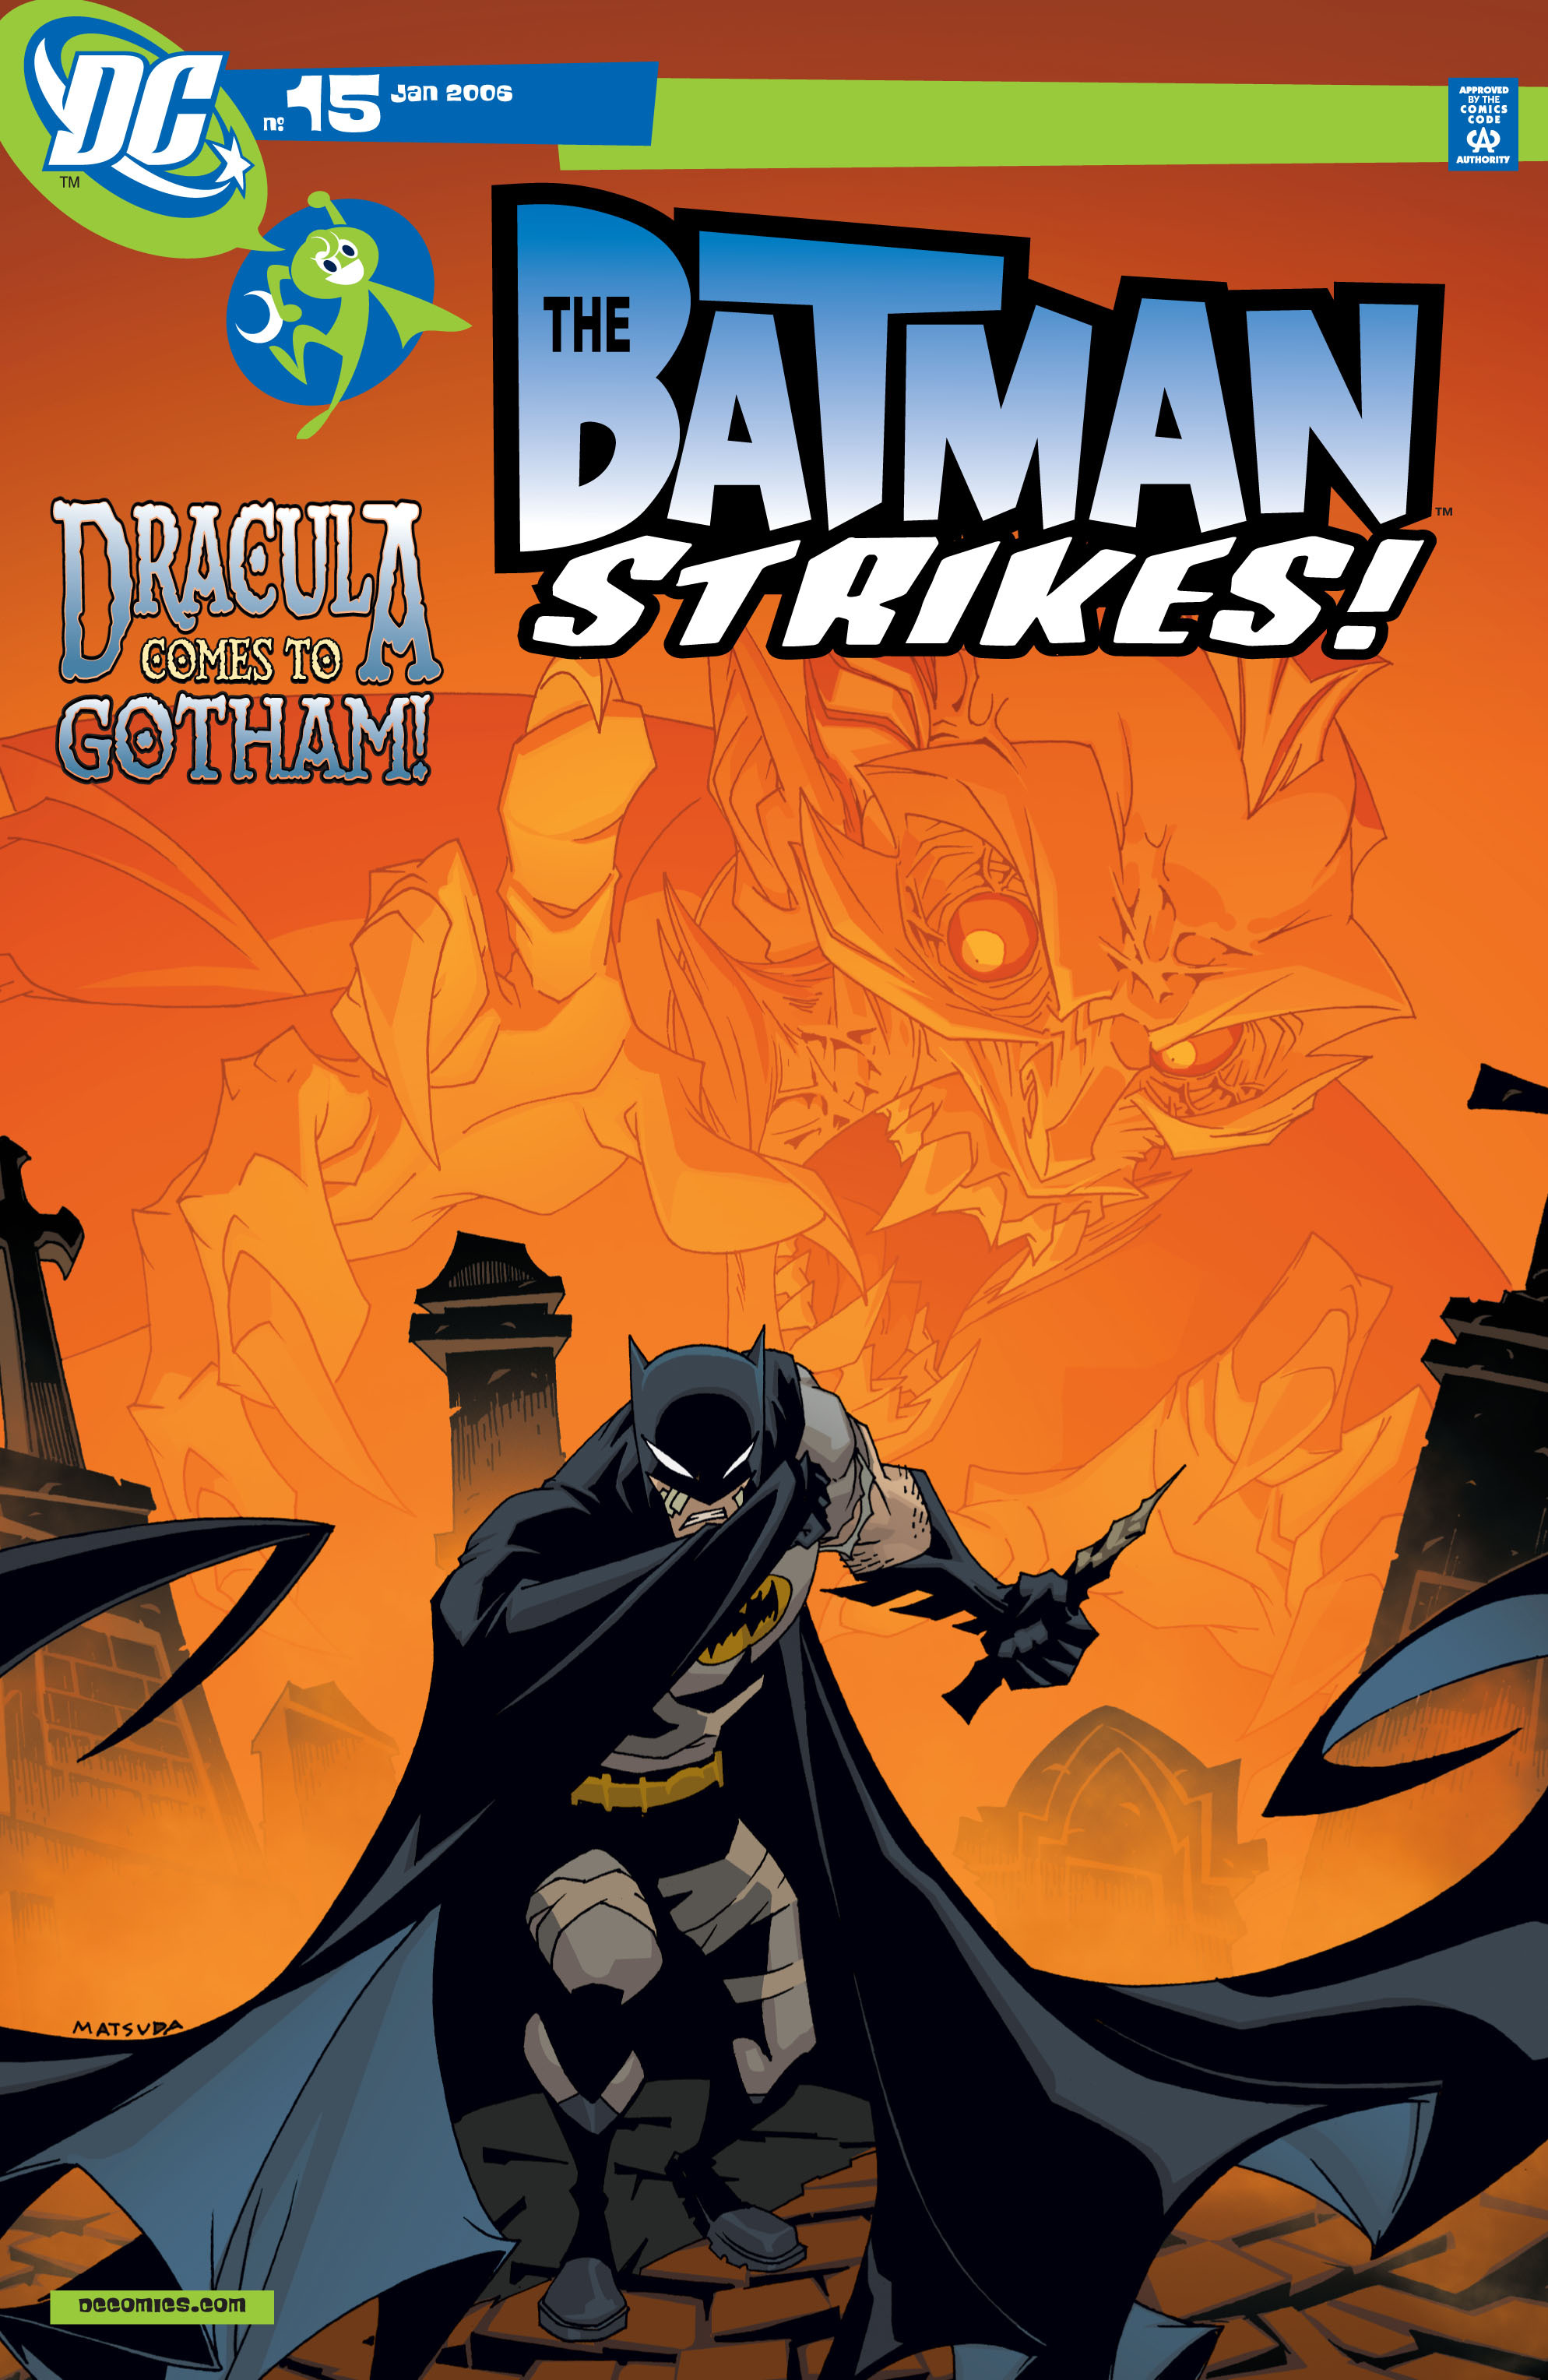 The Batman Strikes 15 | Read The Batman Strikes 15 comic online in high  quality. Read Full Comic online for free - Read comics online in high  quality .| READ COMIC ONLINE